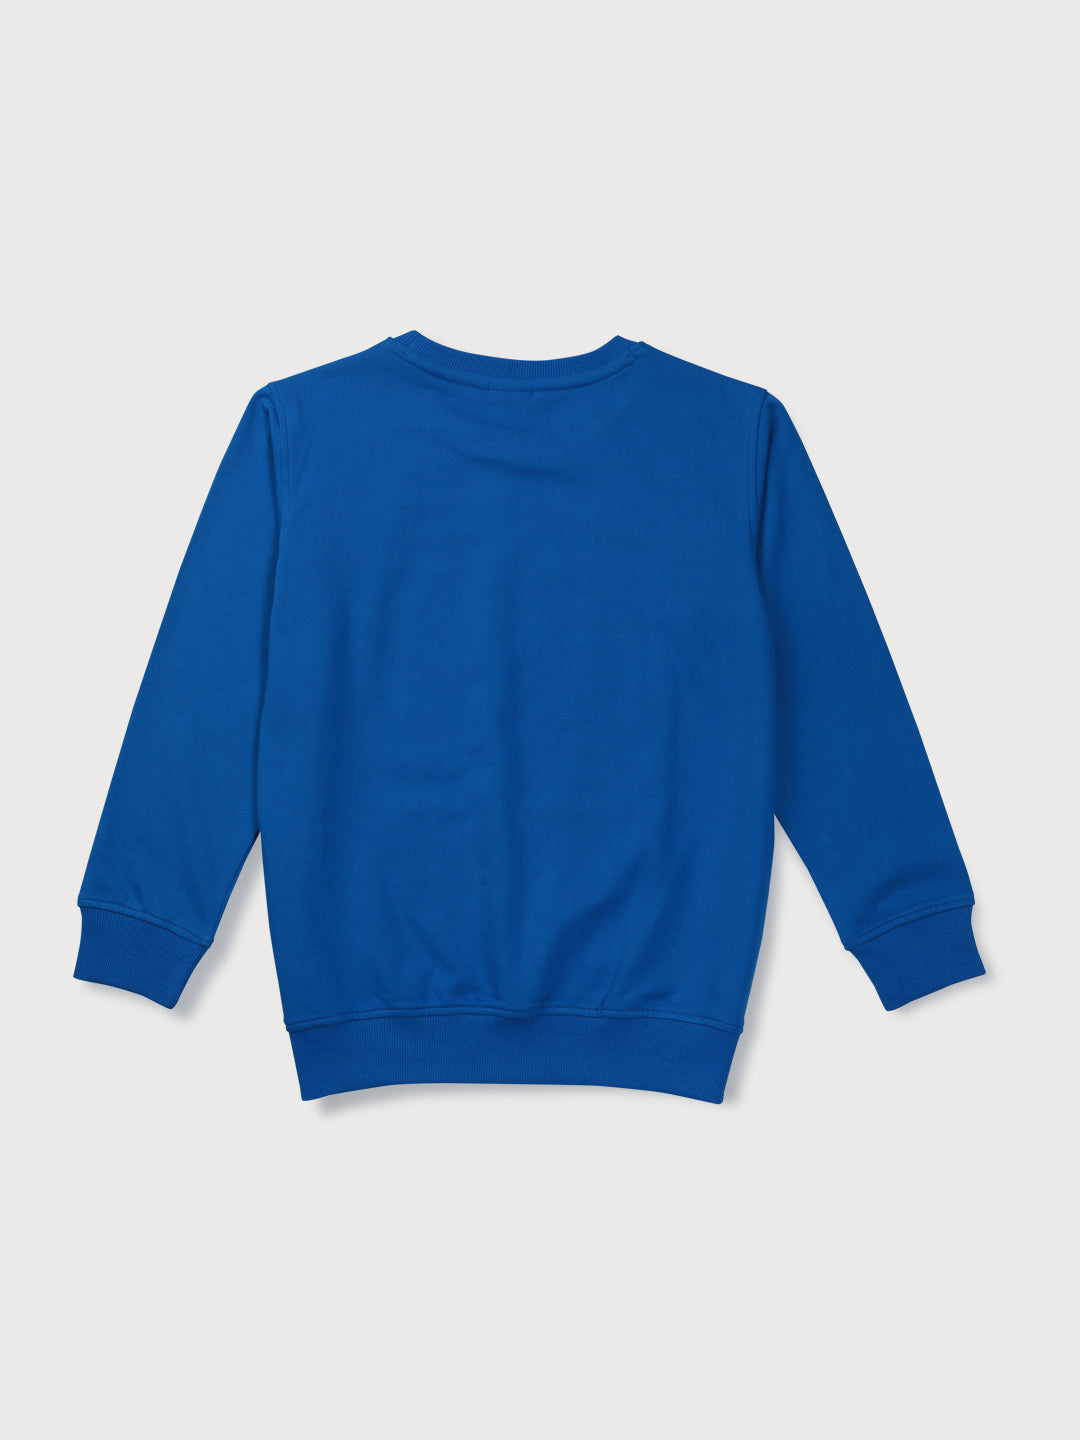 Boys Blue Knits Printed  Full Sleeves Sweat Shirt